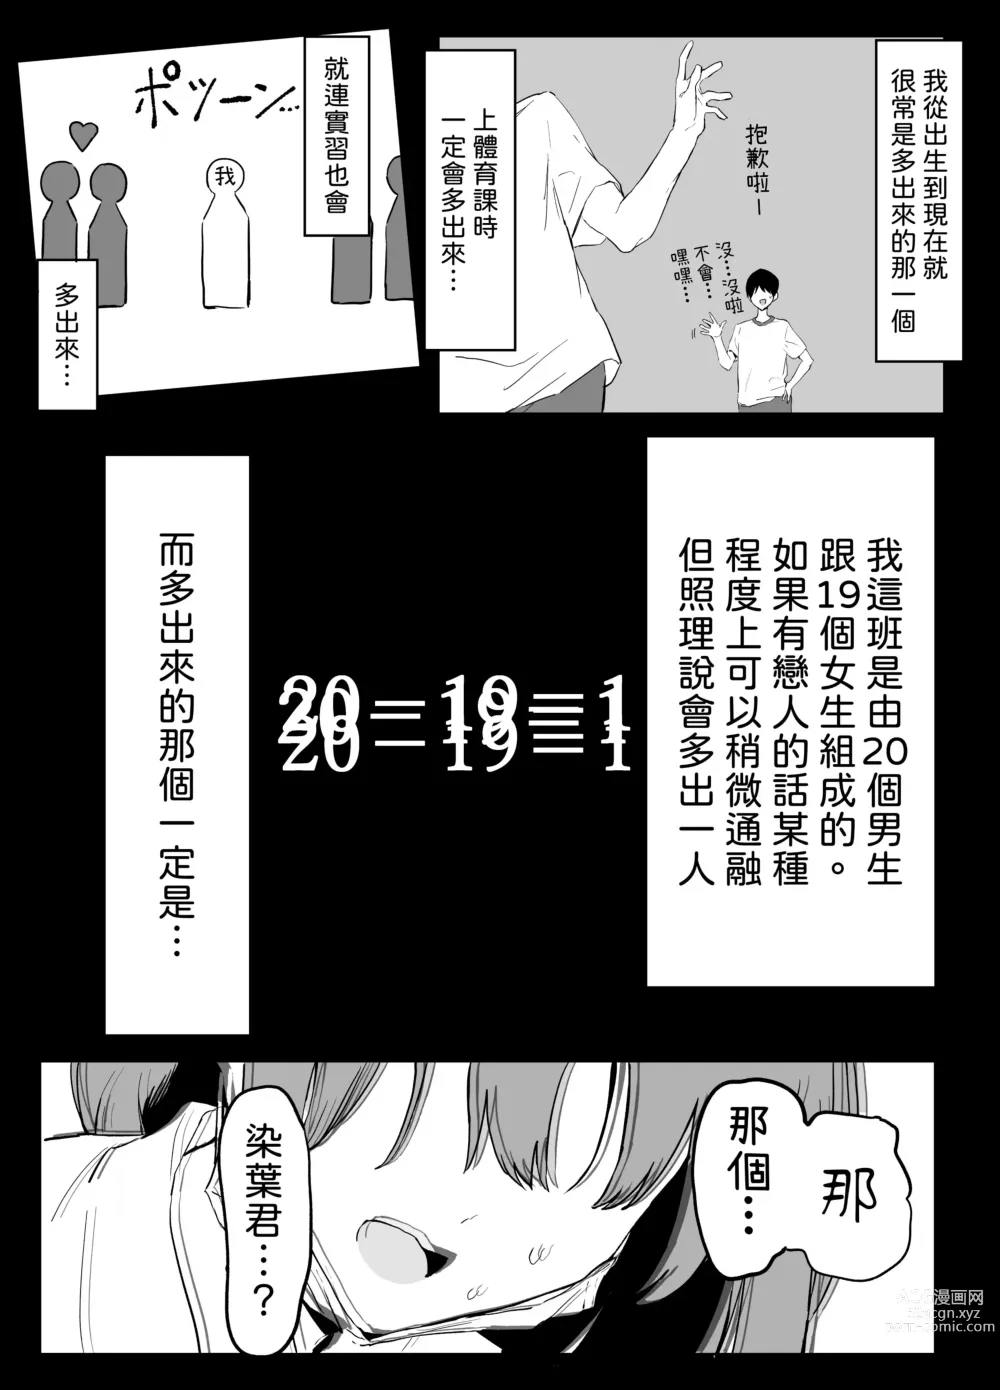 Page 6 of doujinshi Seikoui Jisshuu!